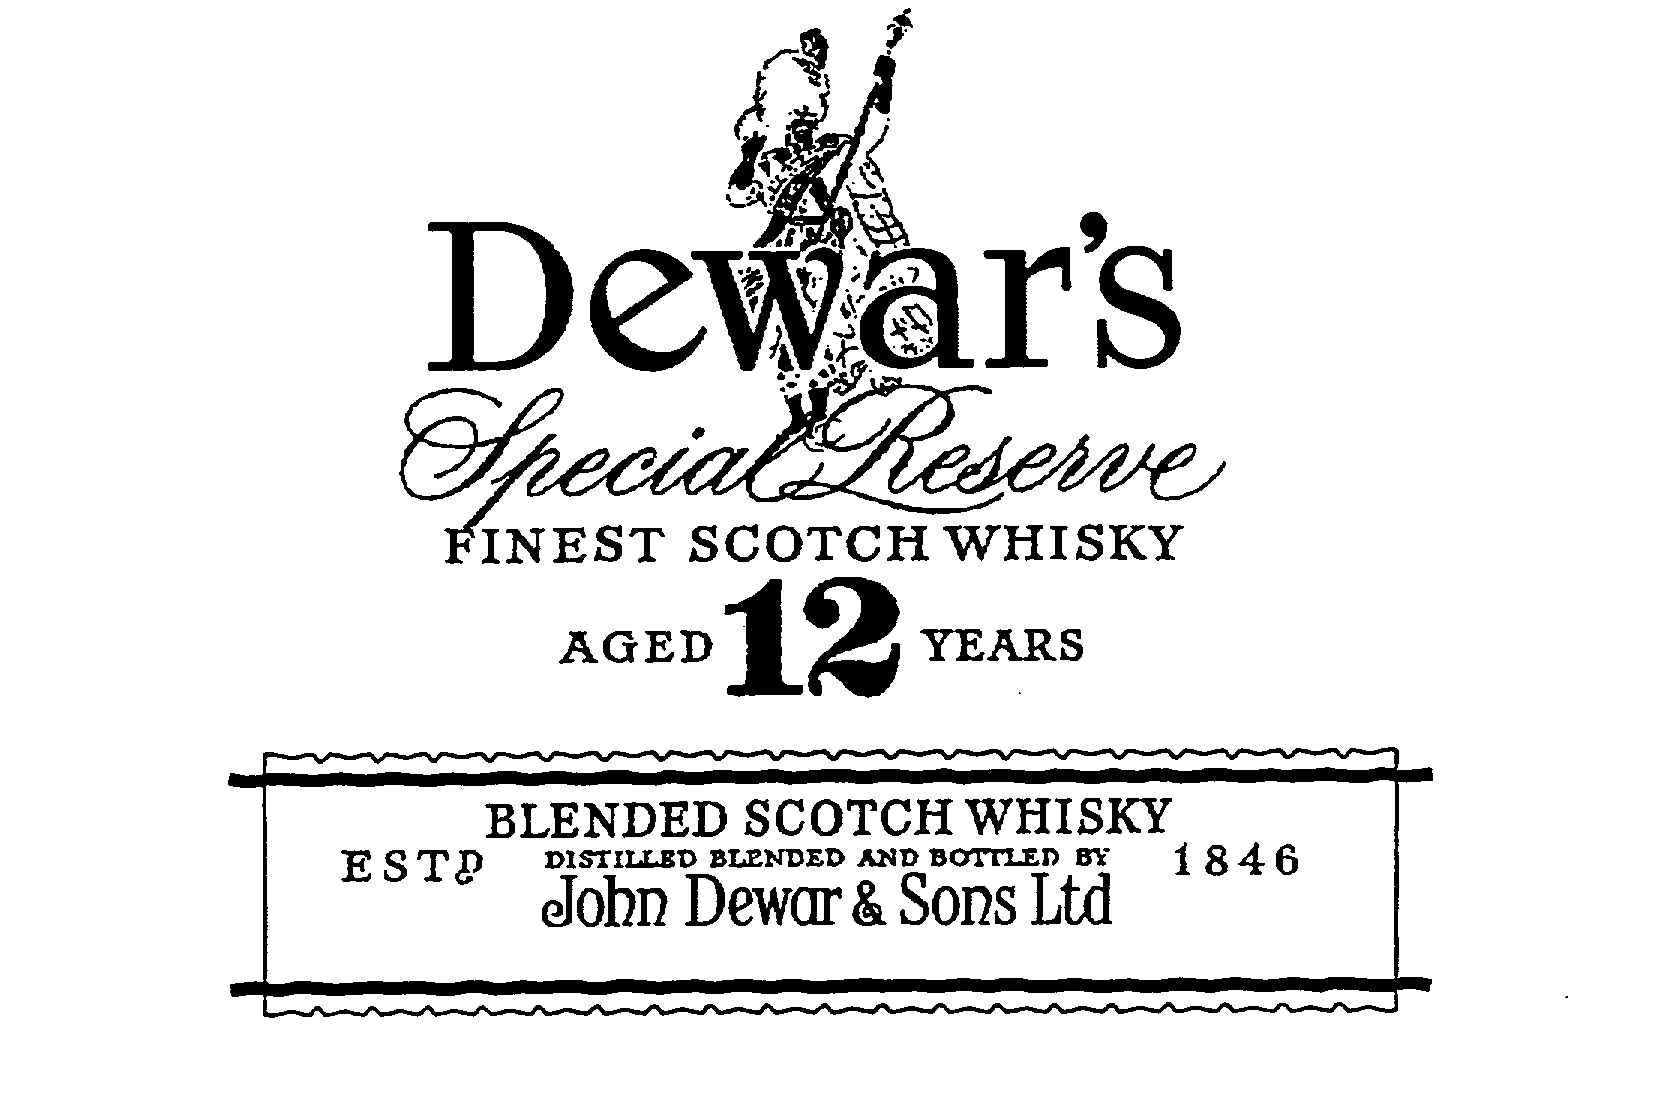  DEWAR'S SPECIAL RESERVE FINEST SCOTCH WHISKY AGED 12 YEARS BLENDED SCOTCH WHISKY DISTILLED BLENDED AND BOTTLED BY JOHN DEWAR &am